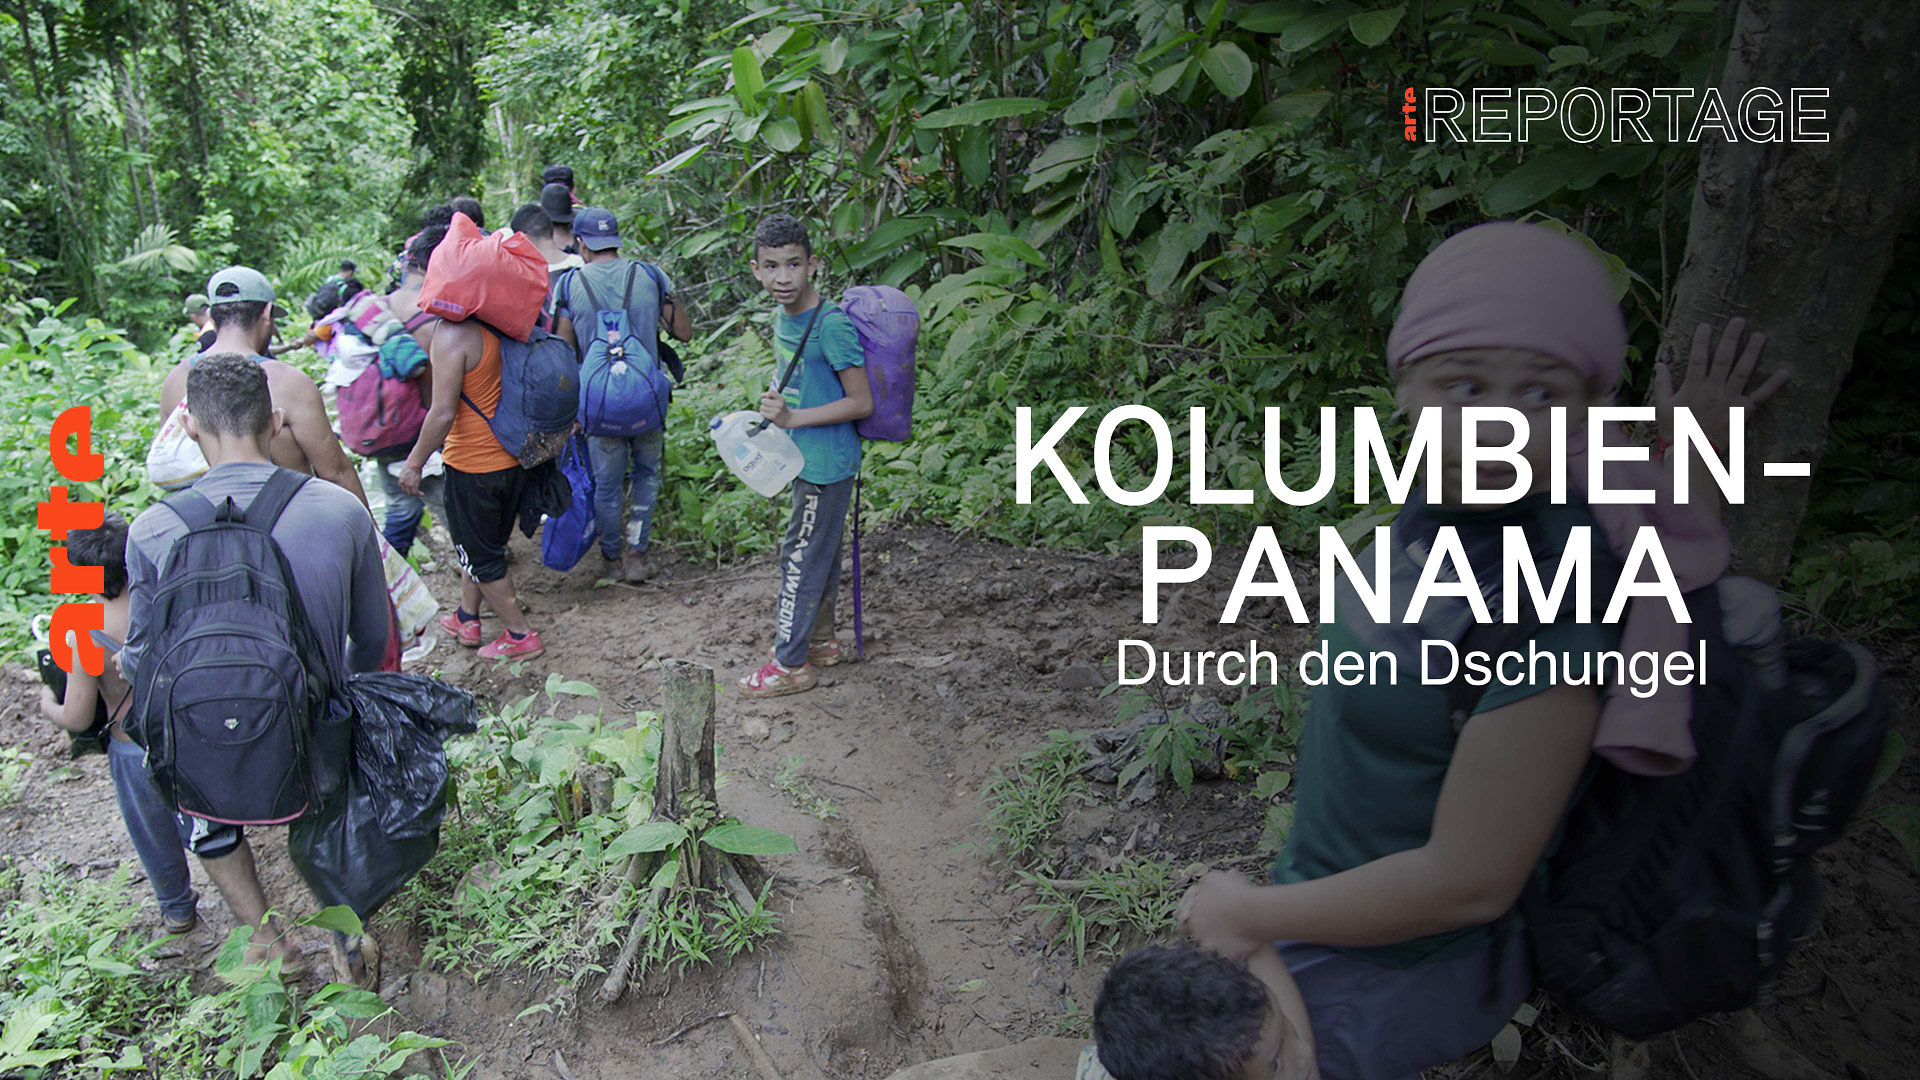 Kolumbien - Panama: Durch den Dschungel